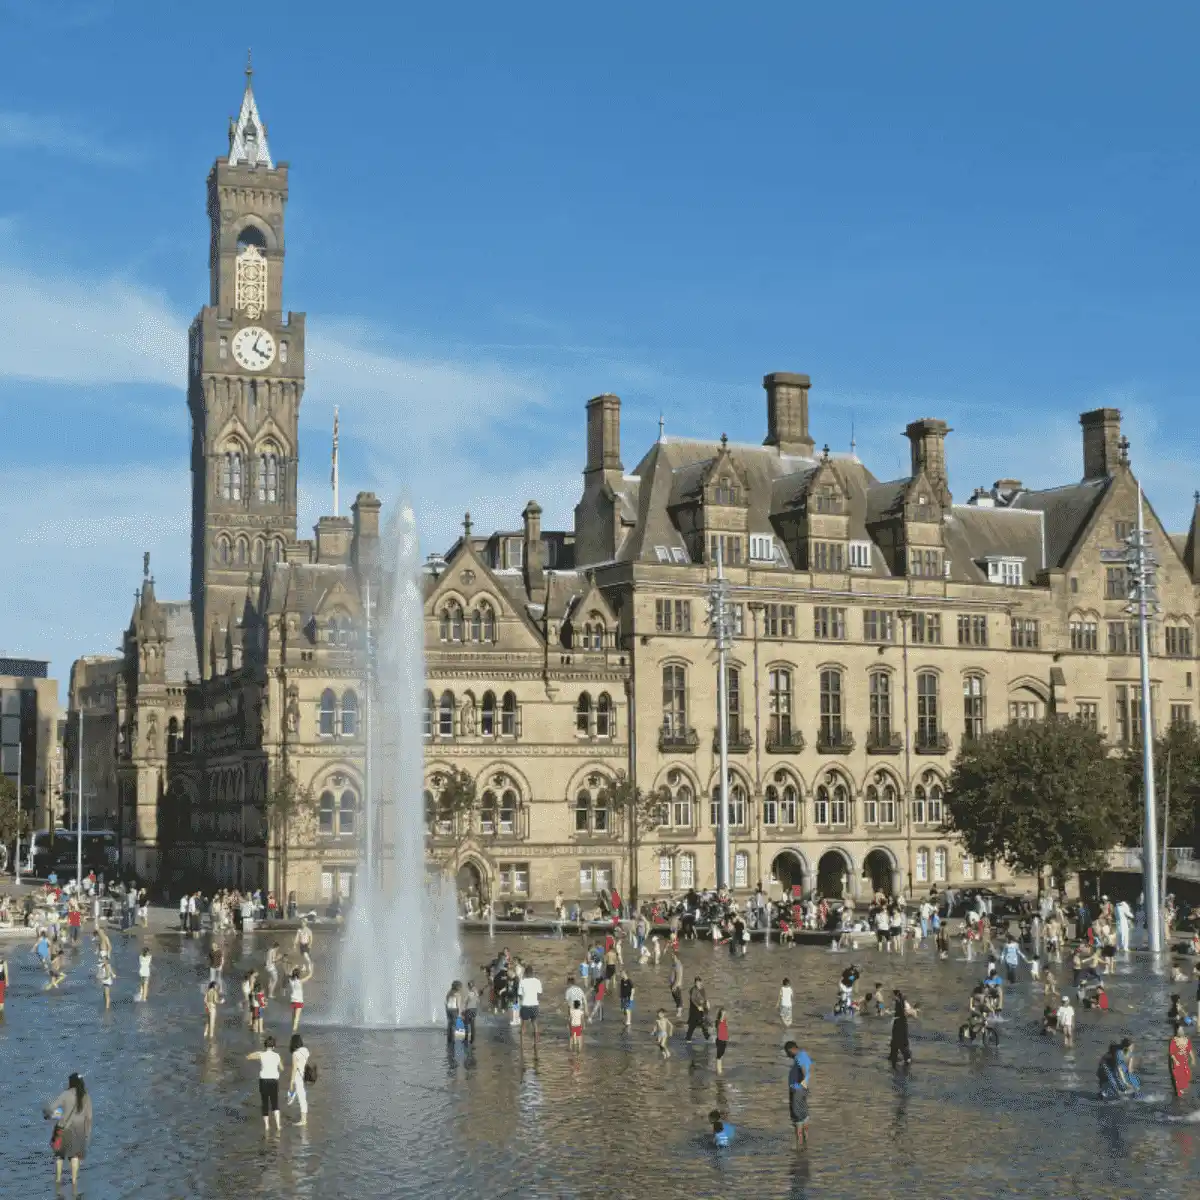 Bradford image